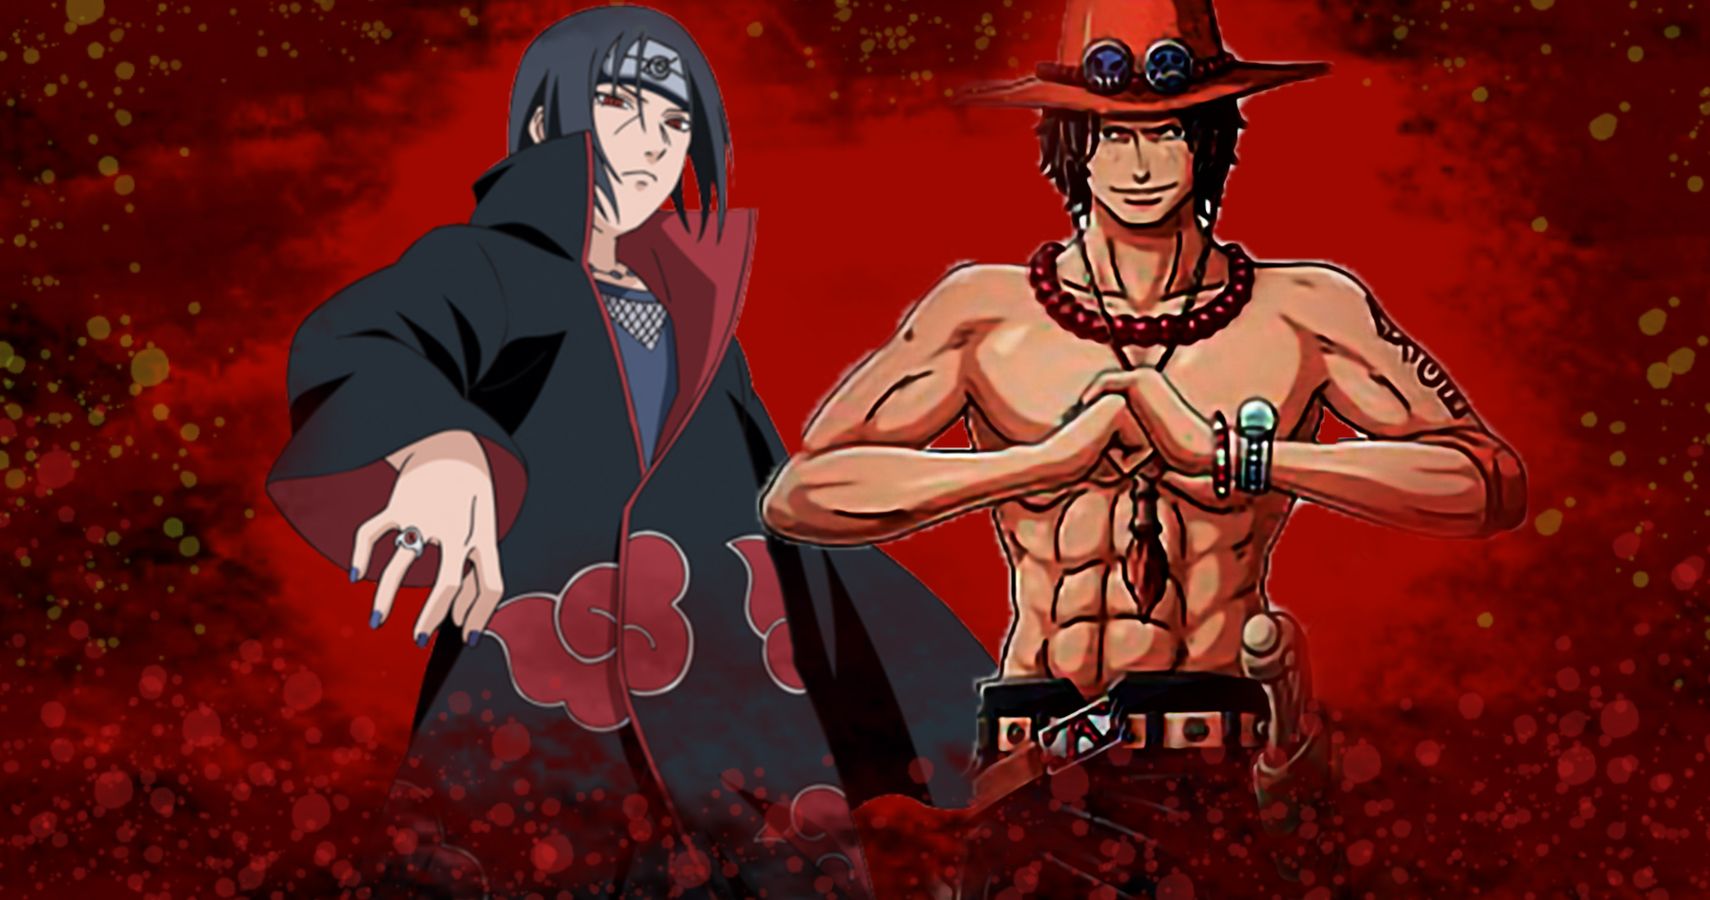 Who would win, Usopp (One Piece) vs Itachi Uchiha (Naruto)? - Quora